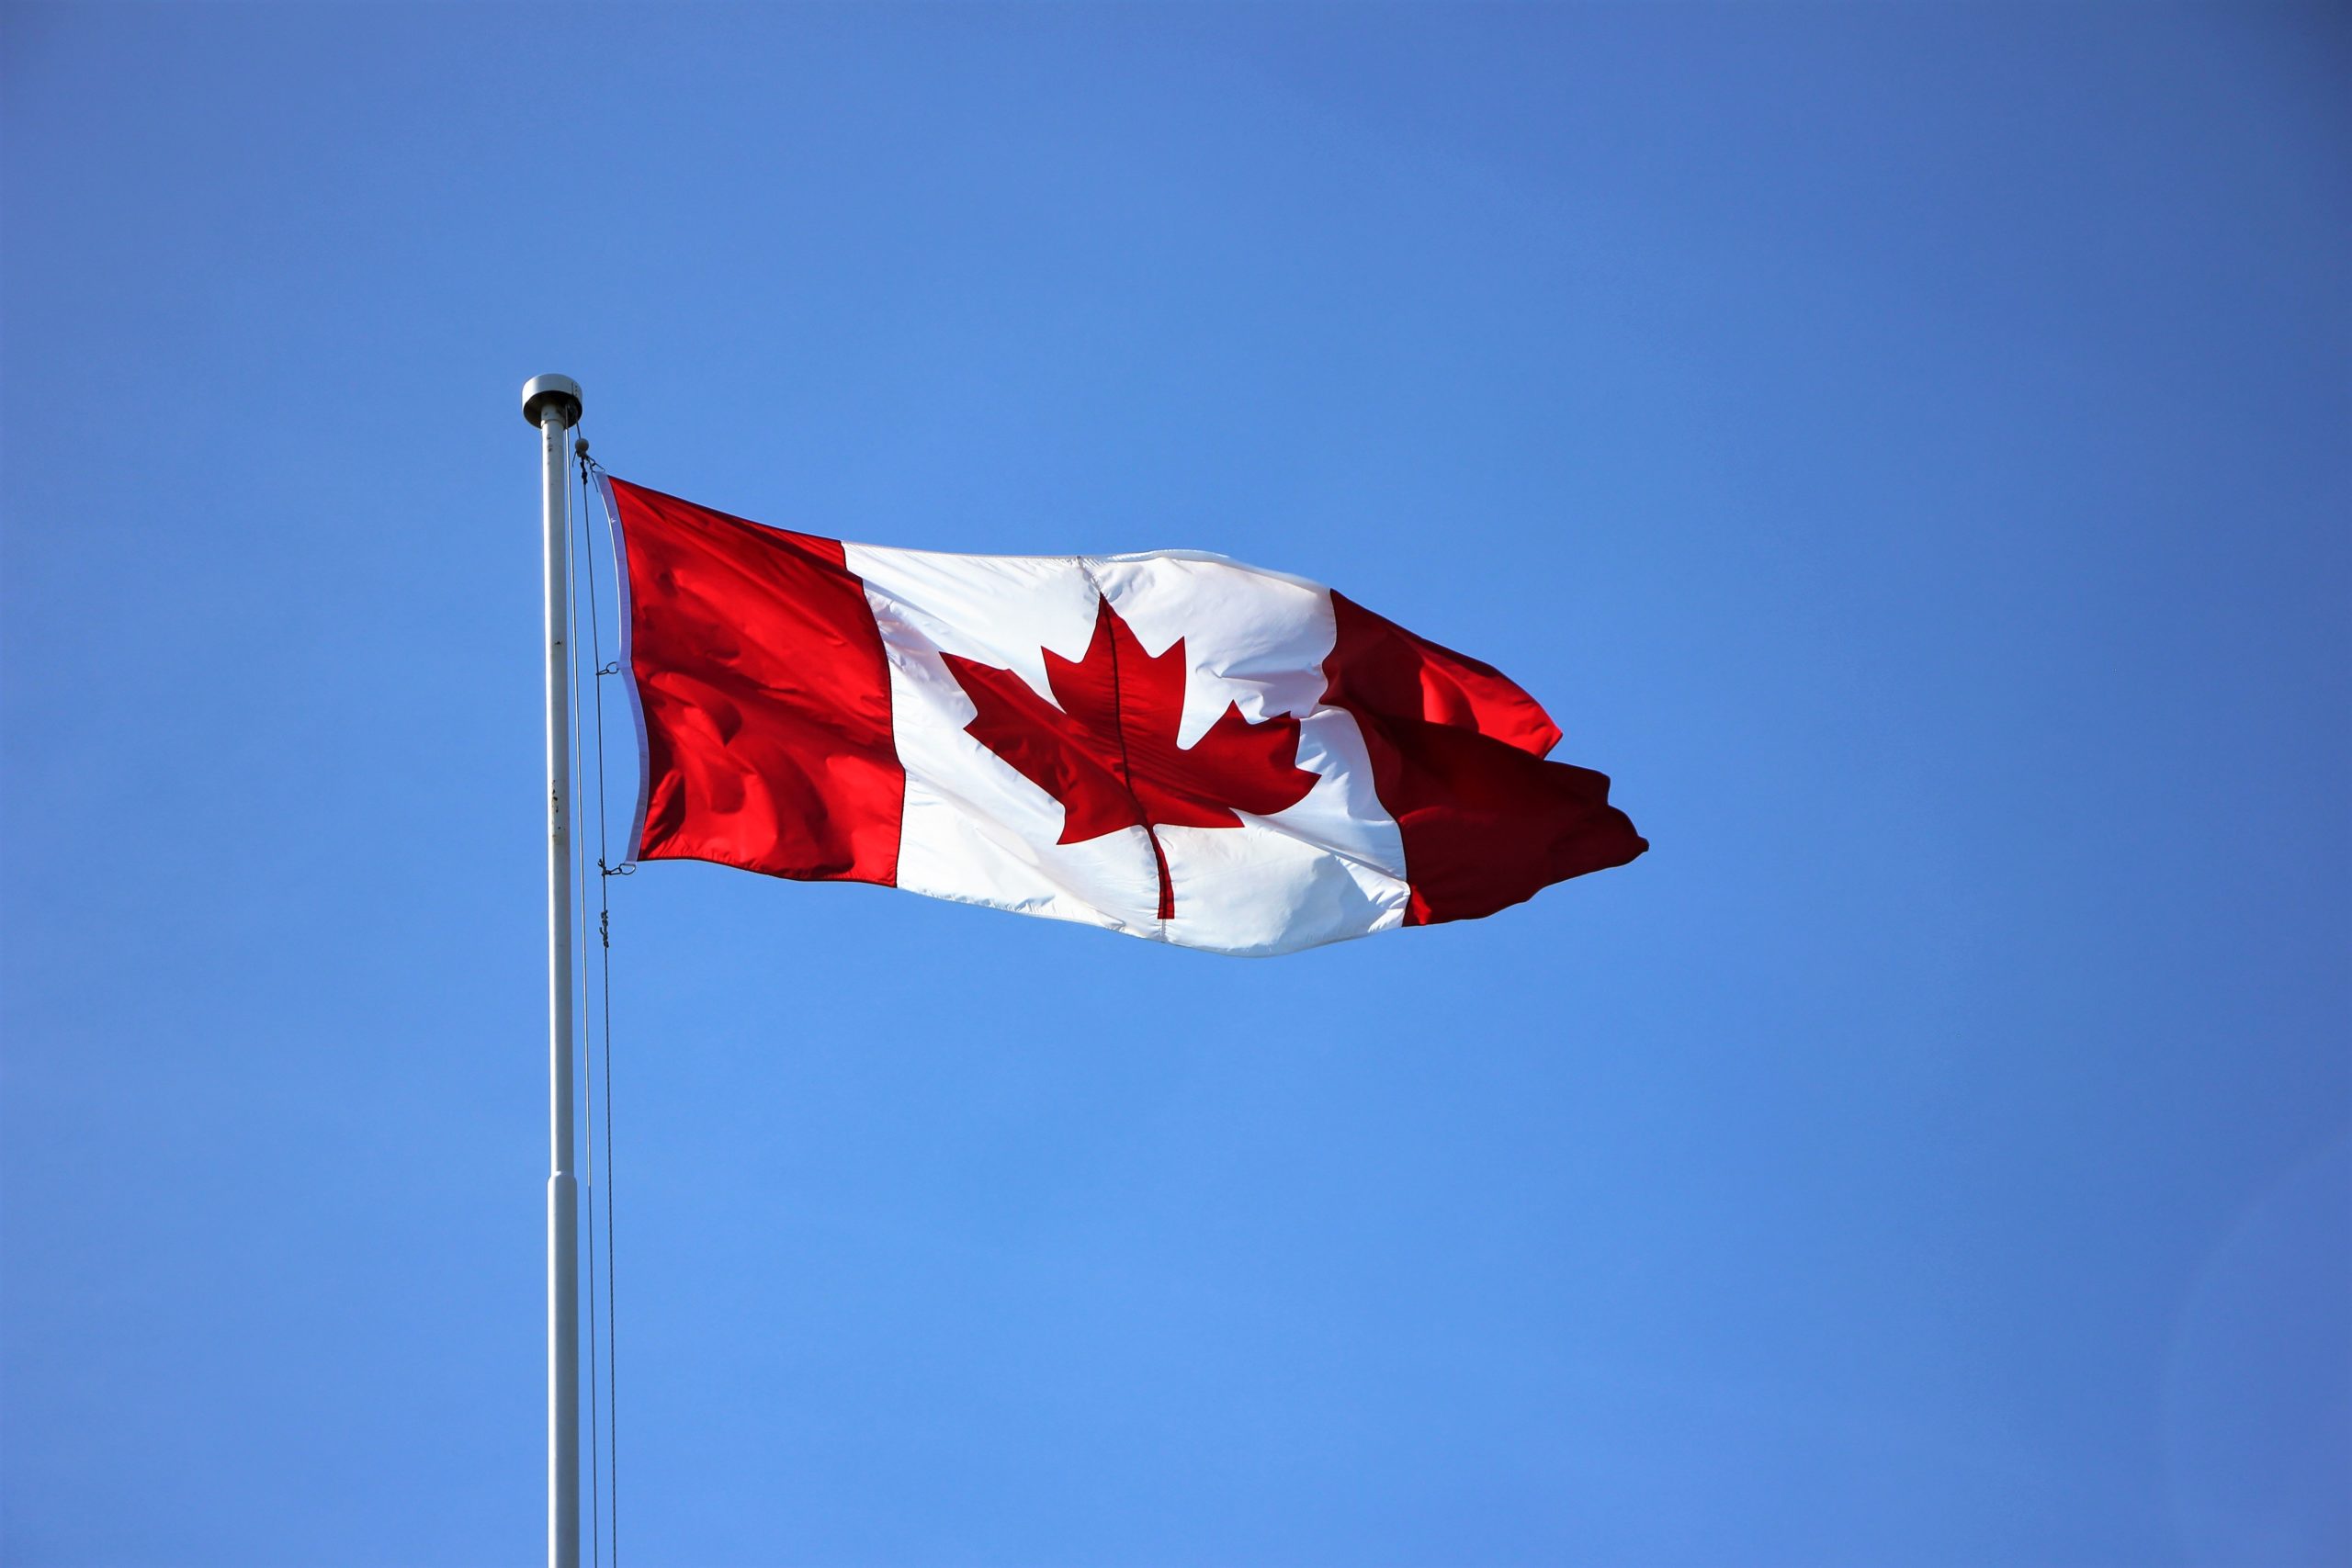 The Canadian flag waving against a blue sky.